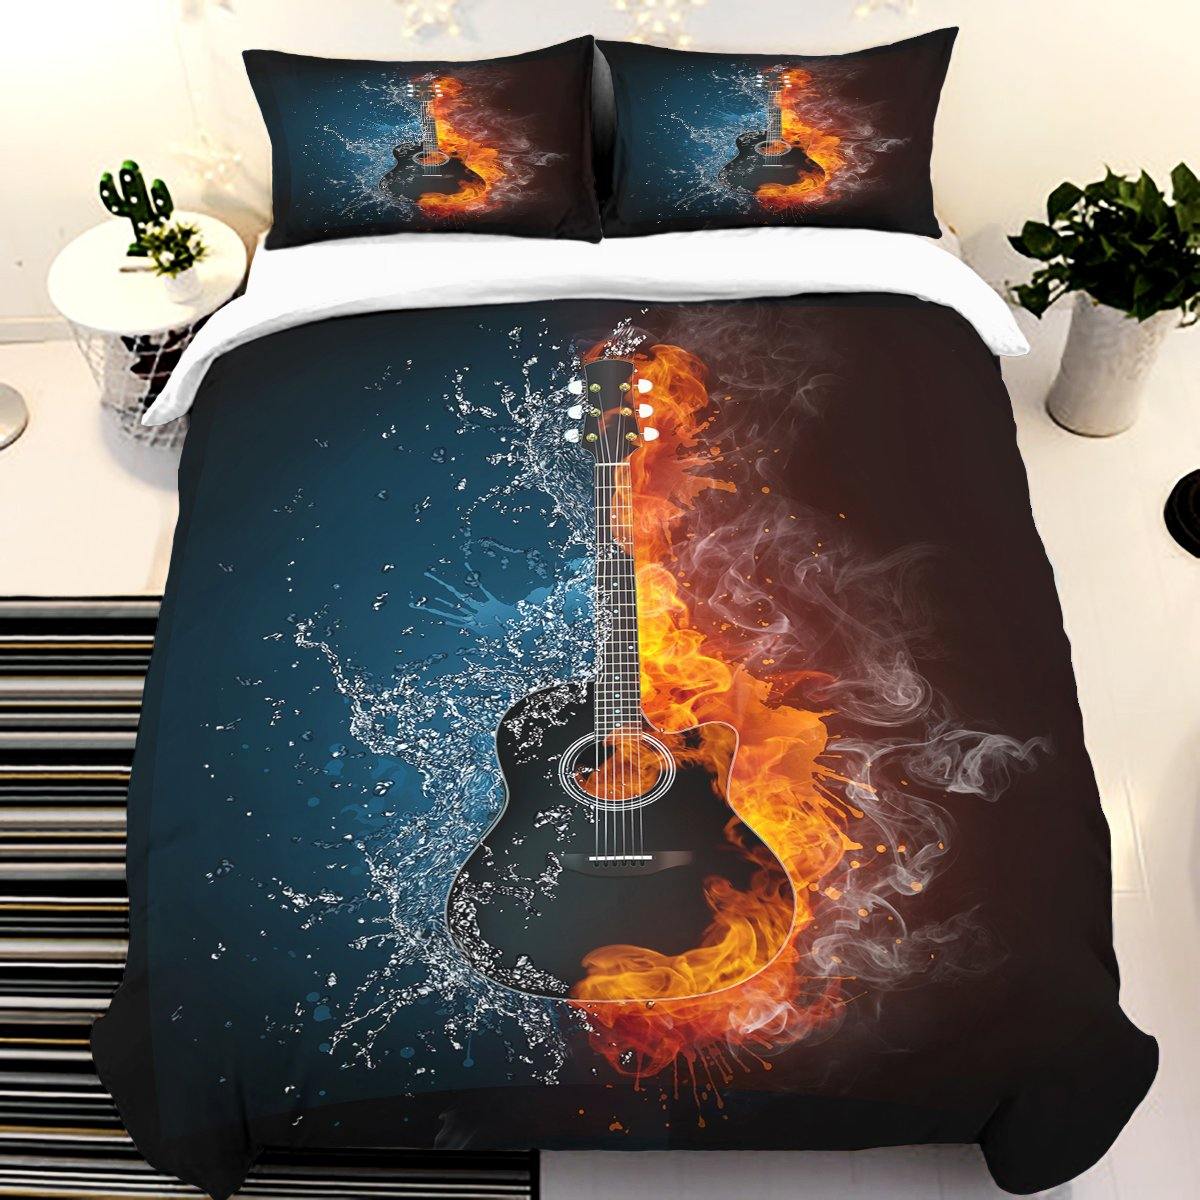 Cool Fire Style 3pcs Guitar Bedding set Duvet cover bedclothes quilt cover pillowcases - Wongs bedding